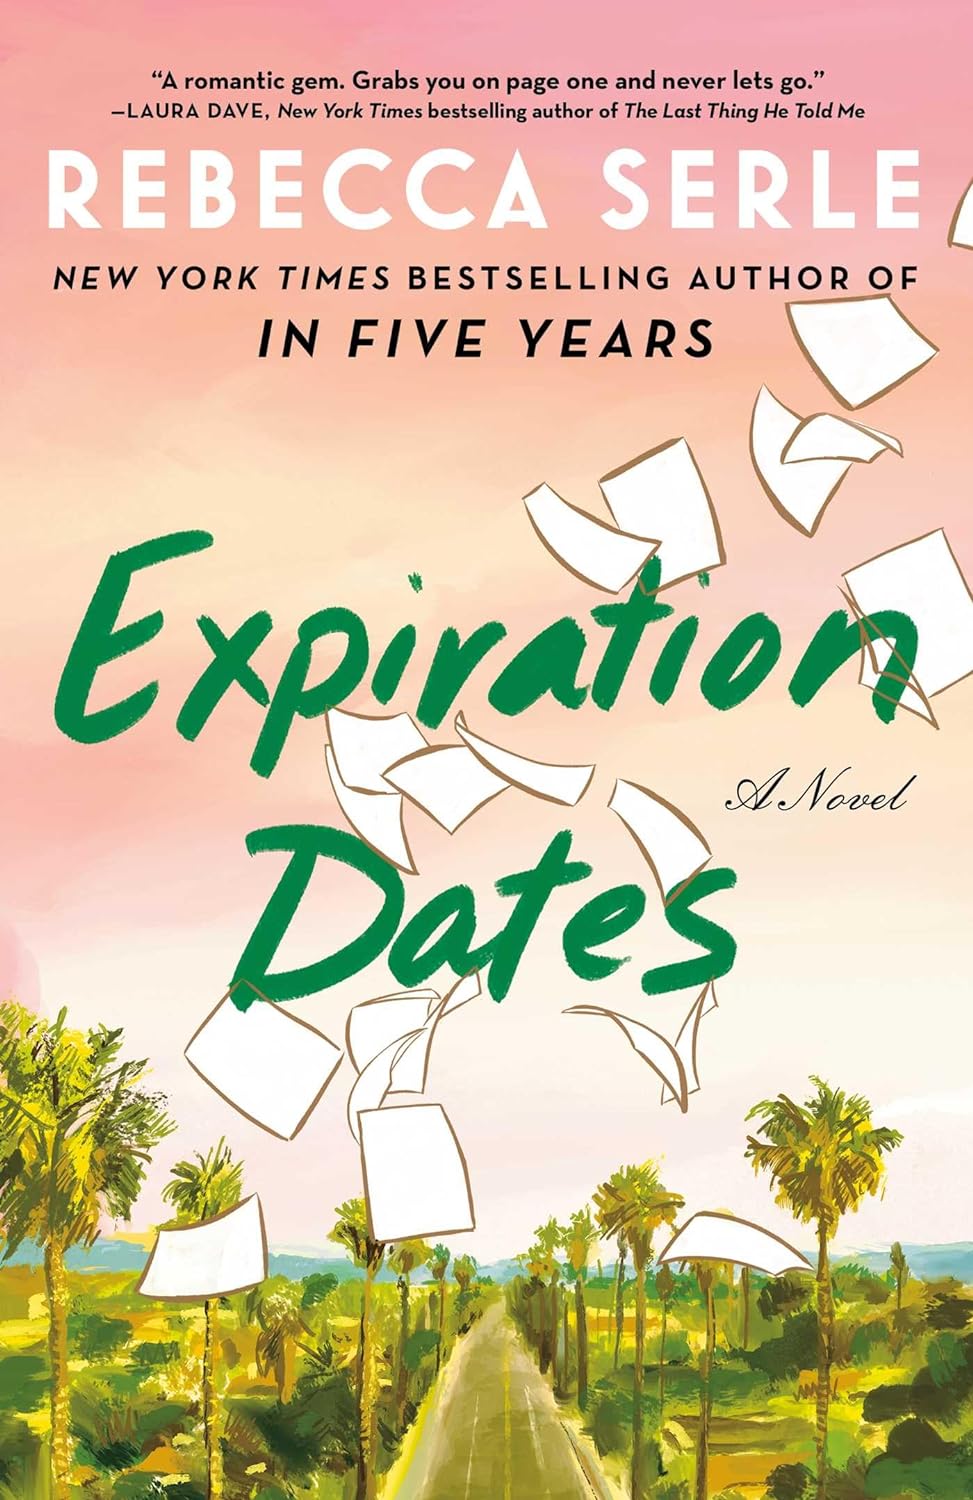 Image for "Expiration Dates"